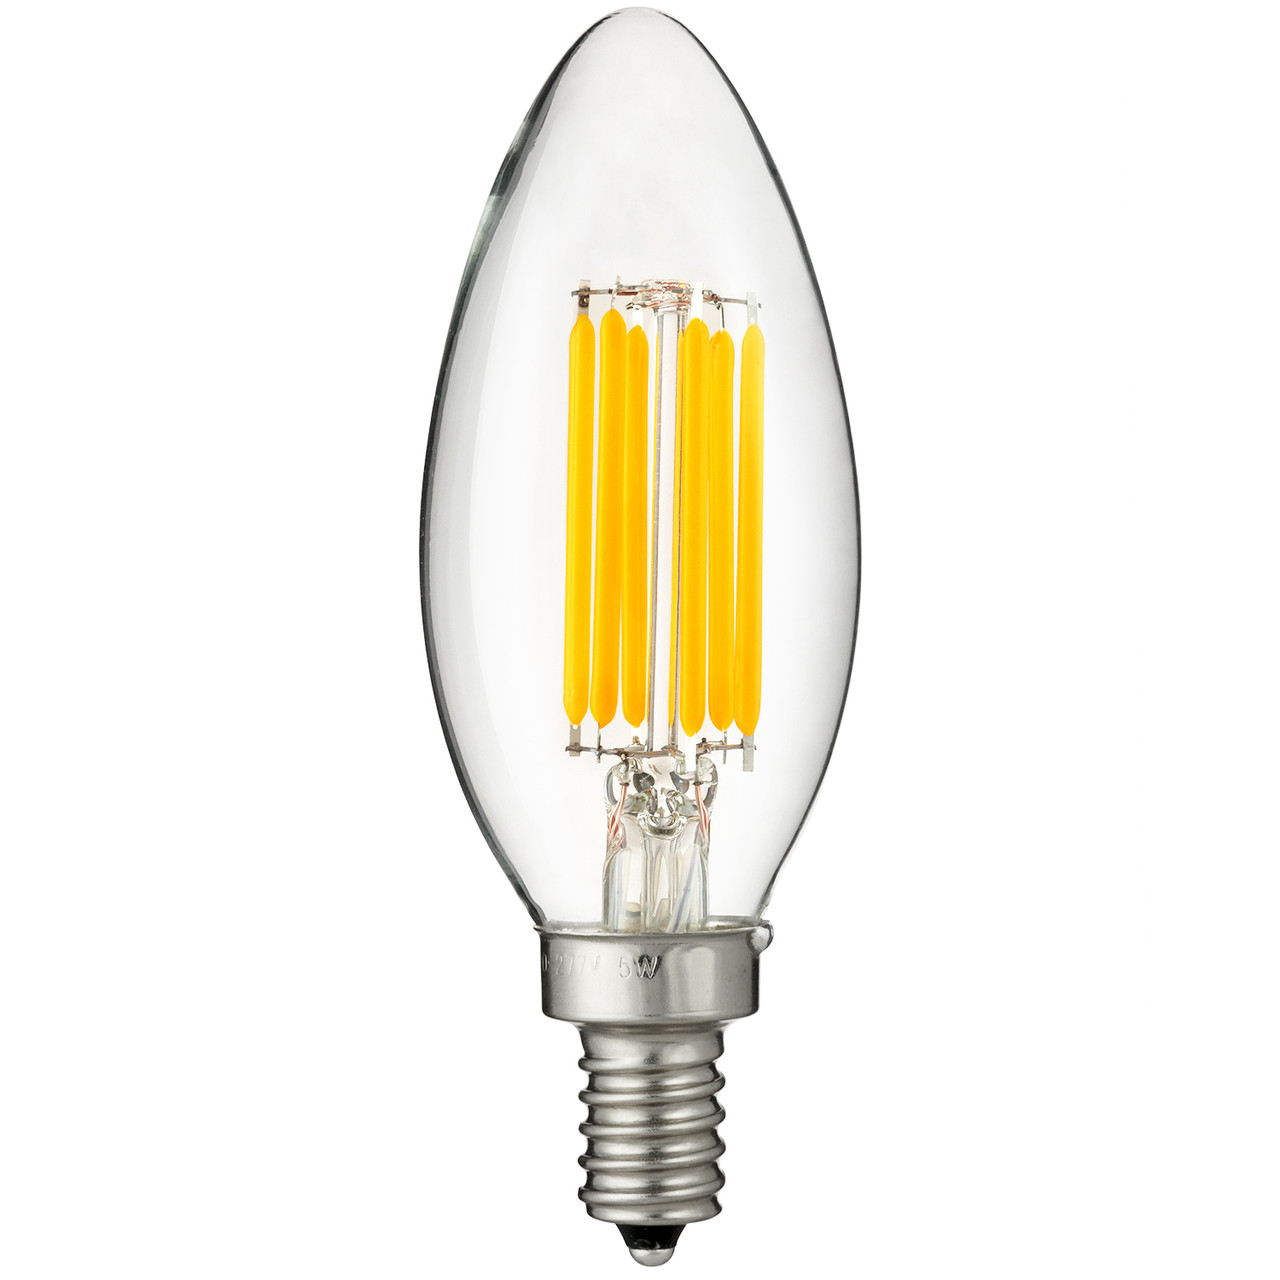 Sunlite - Replacement Bulb - 5W, 220-227V, 630Lm, Warm White, 2700K - Apollo Lighting